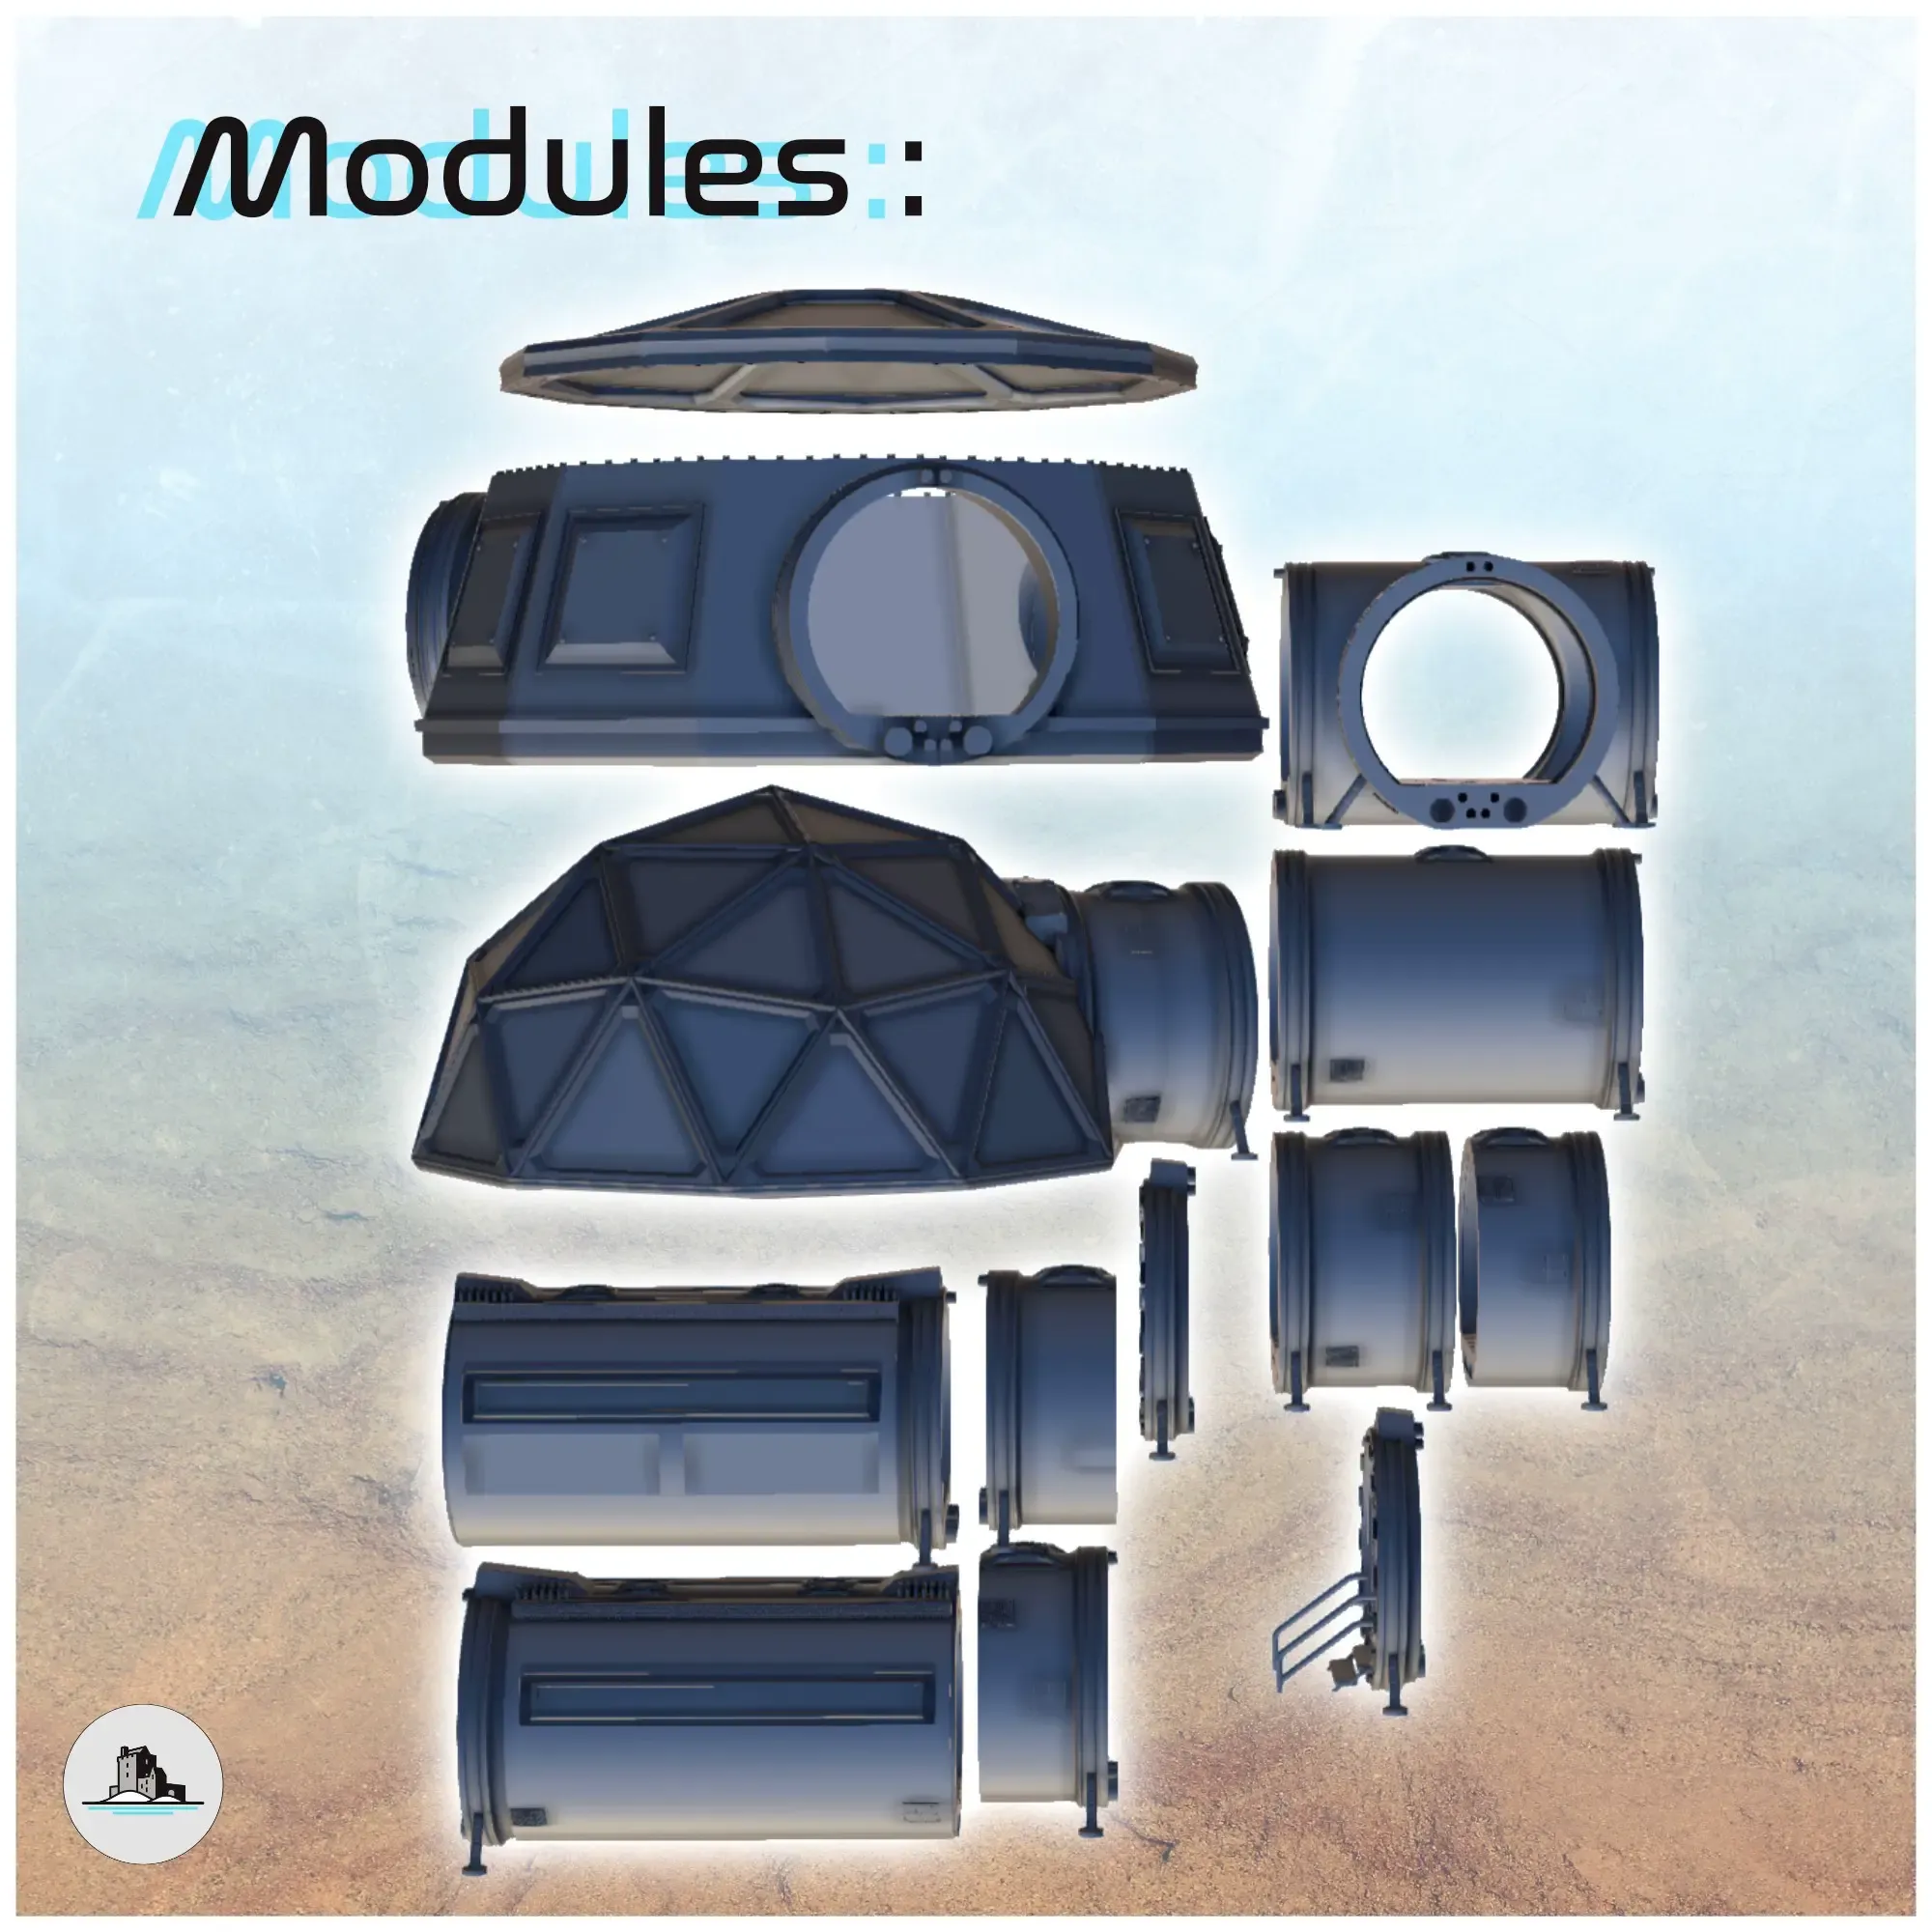 Modular space base 2 - Terrain Scifi Science fiction SF